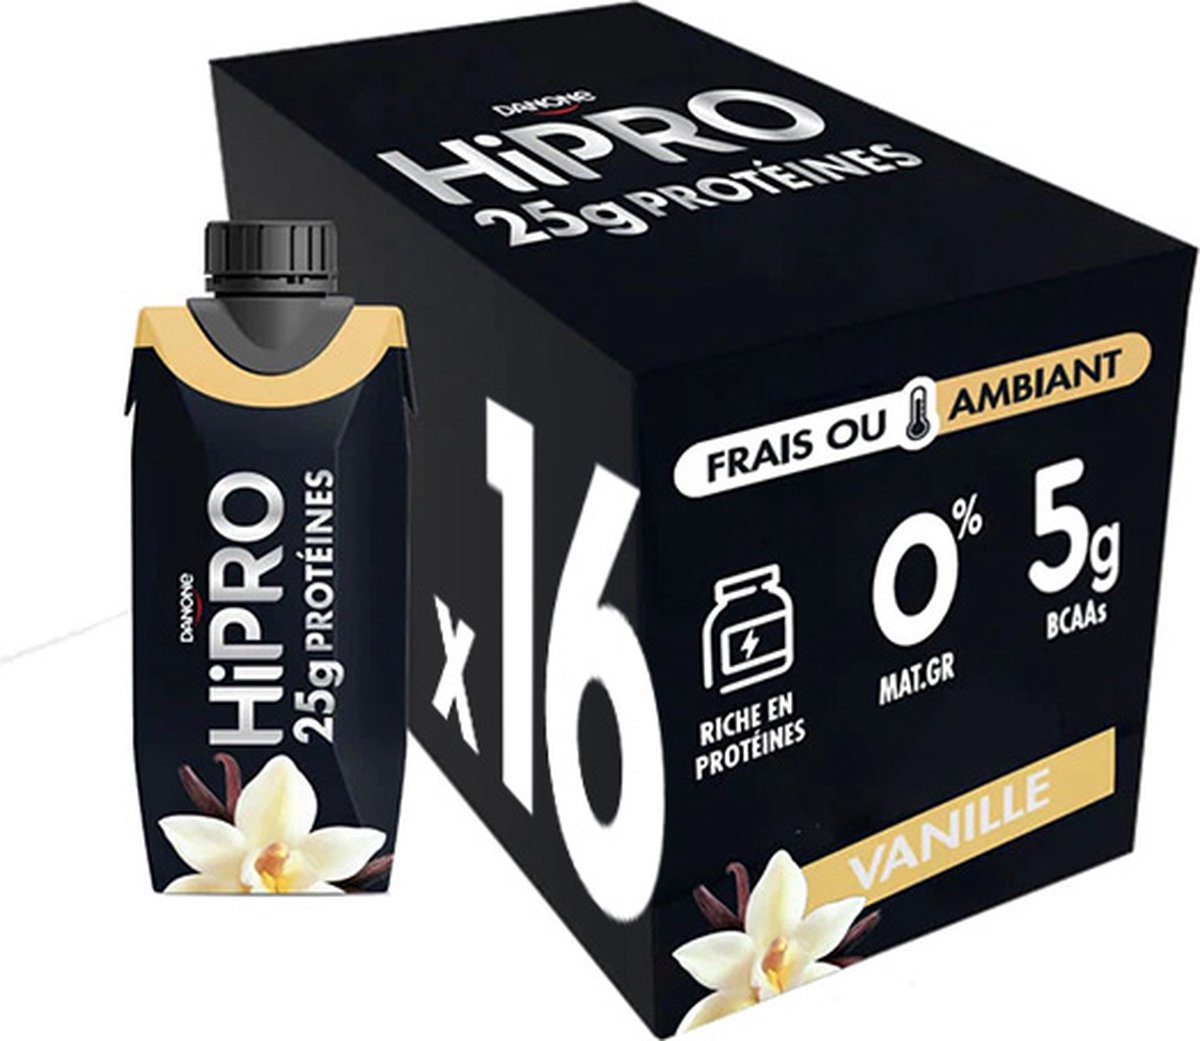 Danone HiPro - Proteïne drank - Vanille - Sportdrank 0% mg - Niet gekoelde brikje met vanillesmaak 25g proteïne - 16 x 330 ml